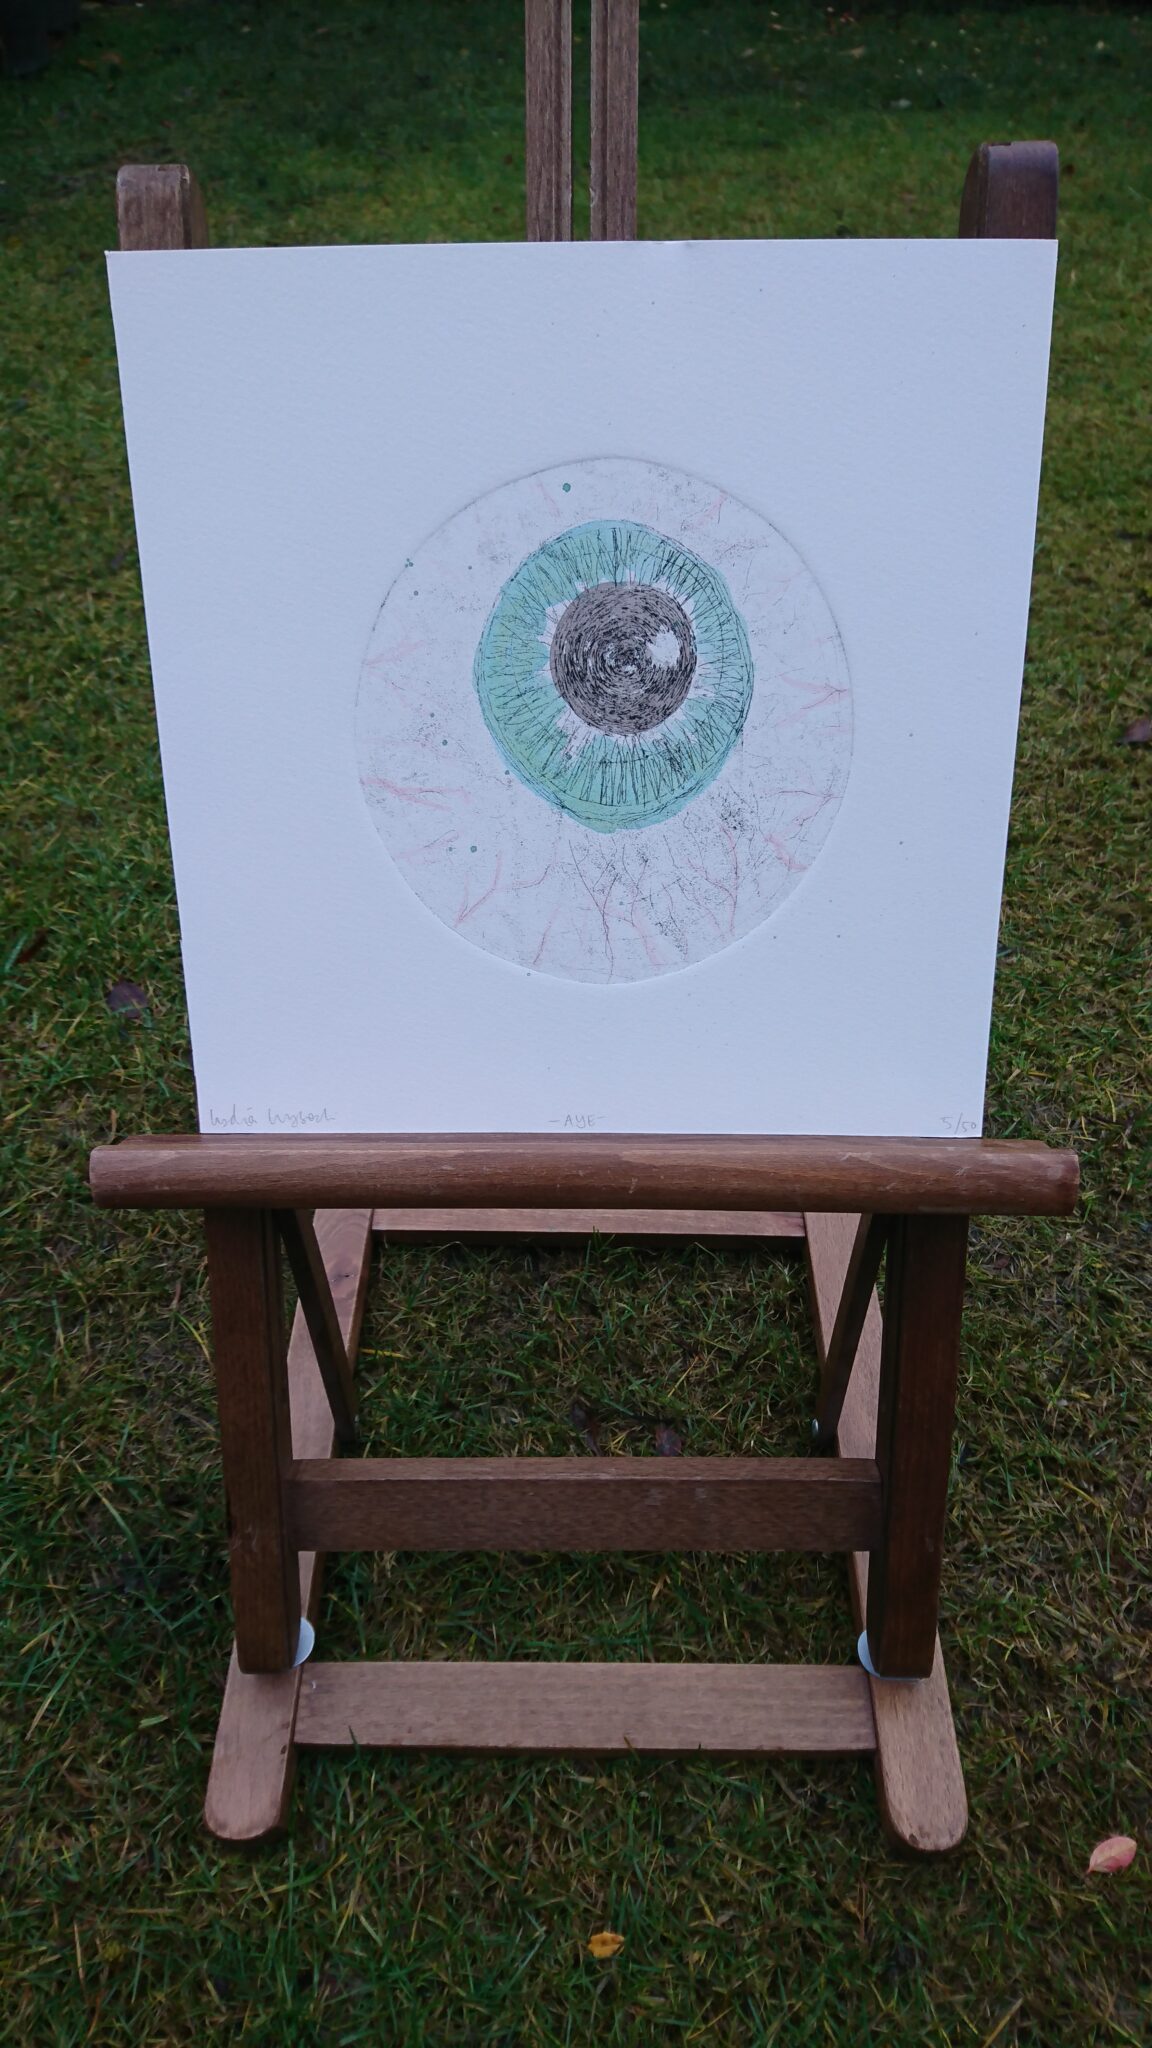 photo of one Aye eyeball etching (green iris), outdoors on an easel